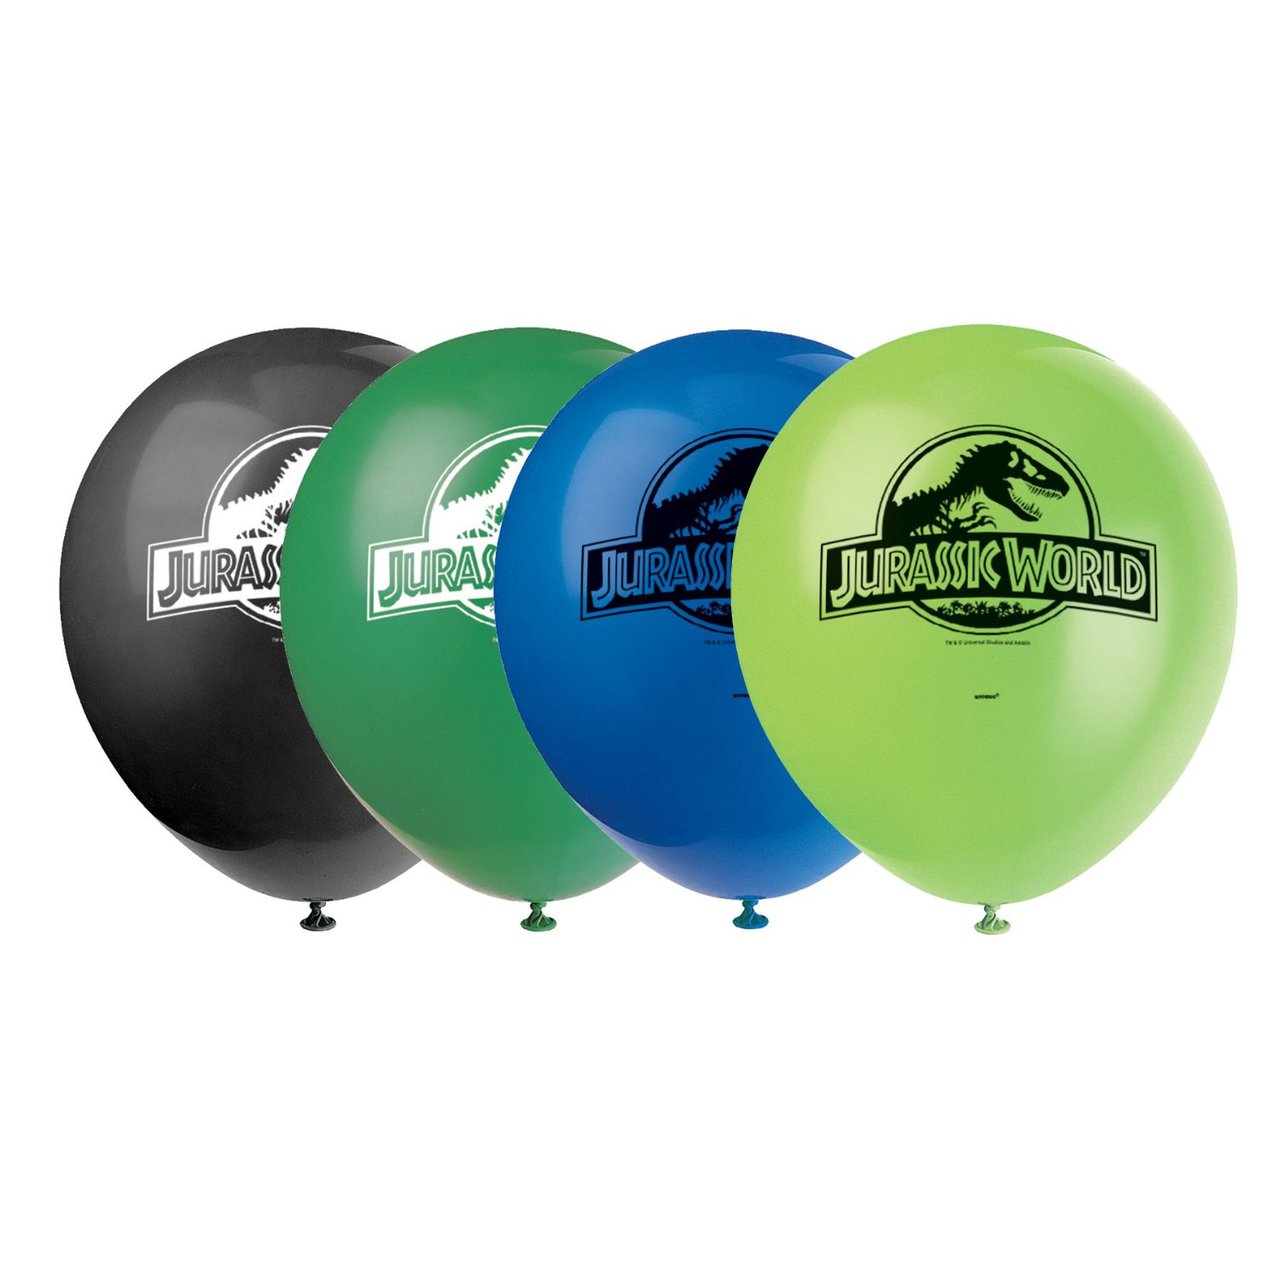 Jurassic World Latex Balloons - image 1 of 2